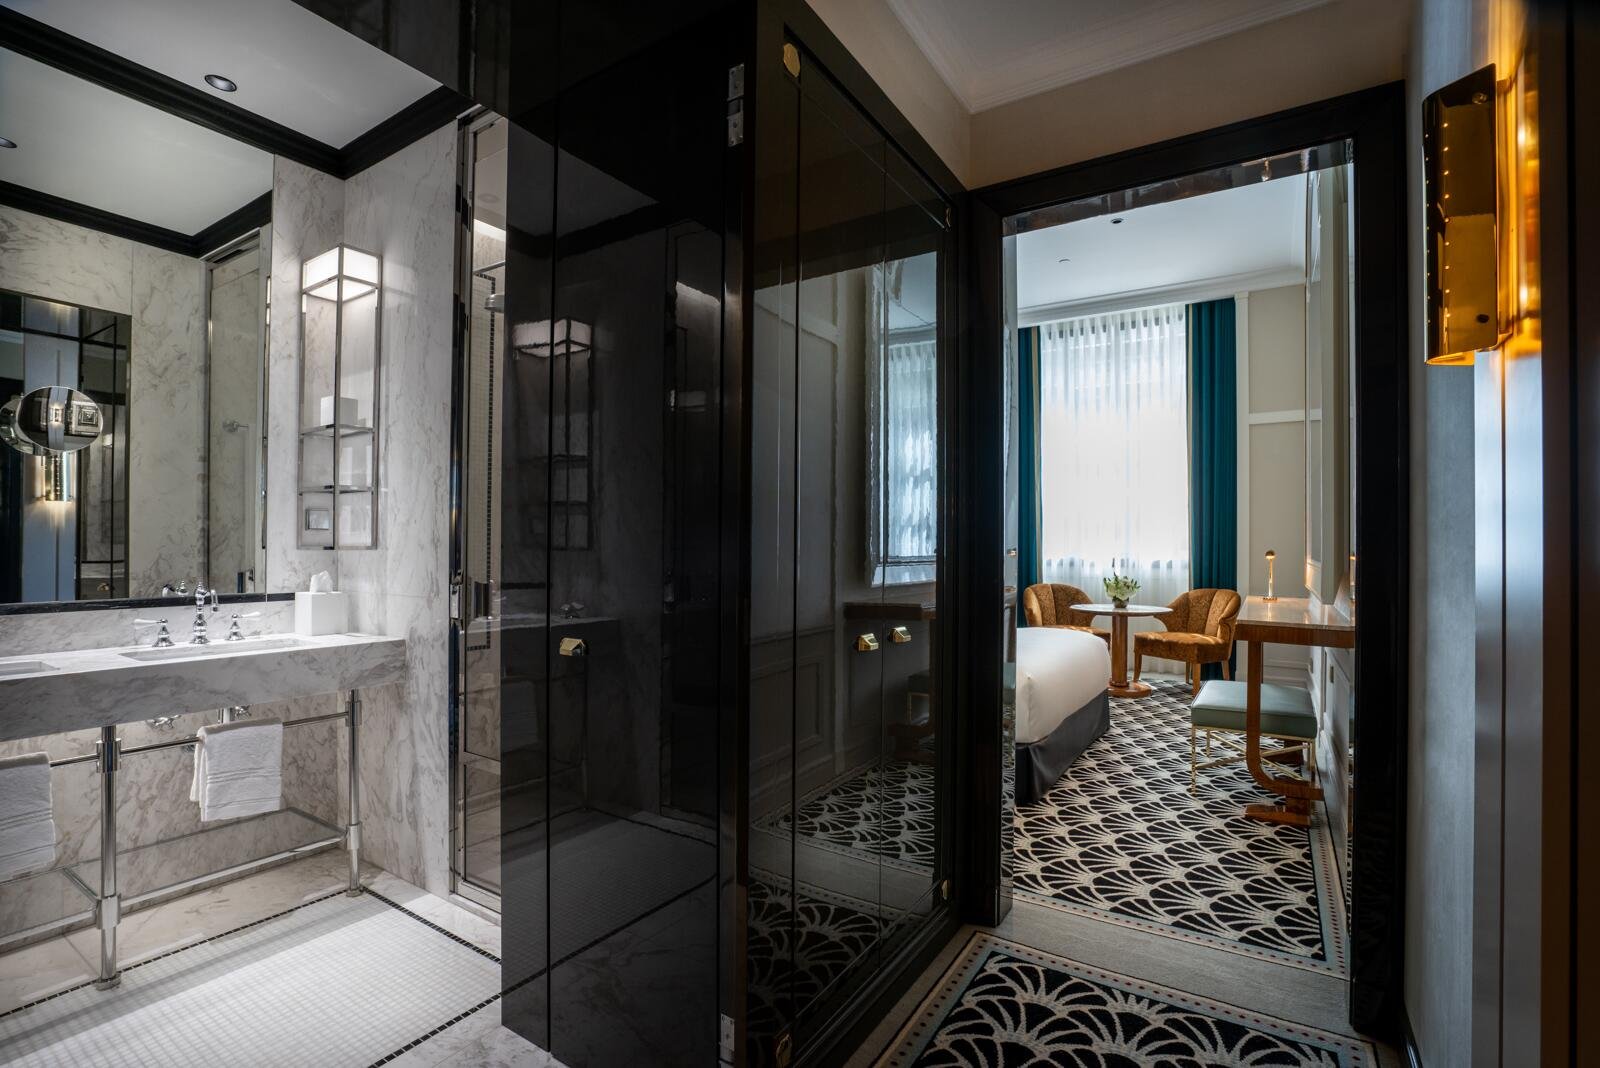 Maison Albar Hotels Le Monumental Palace bathroom superior room